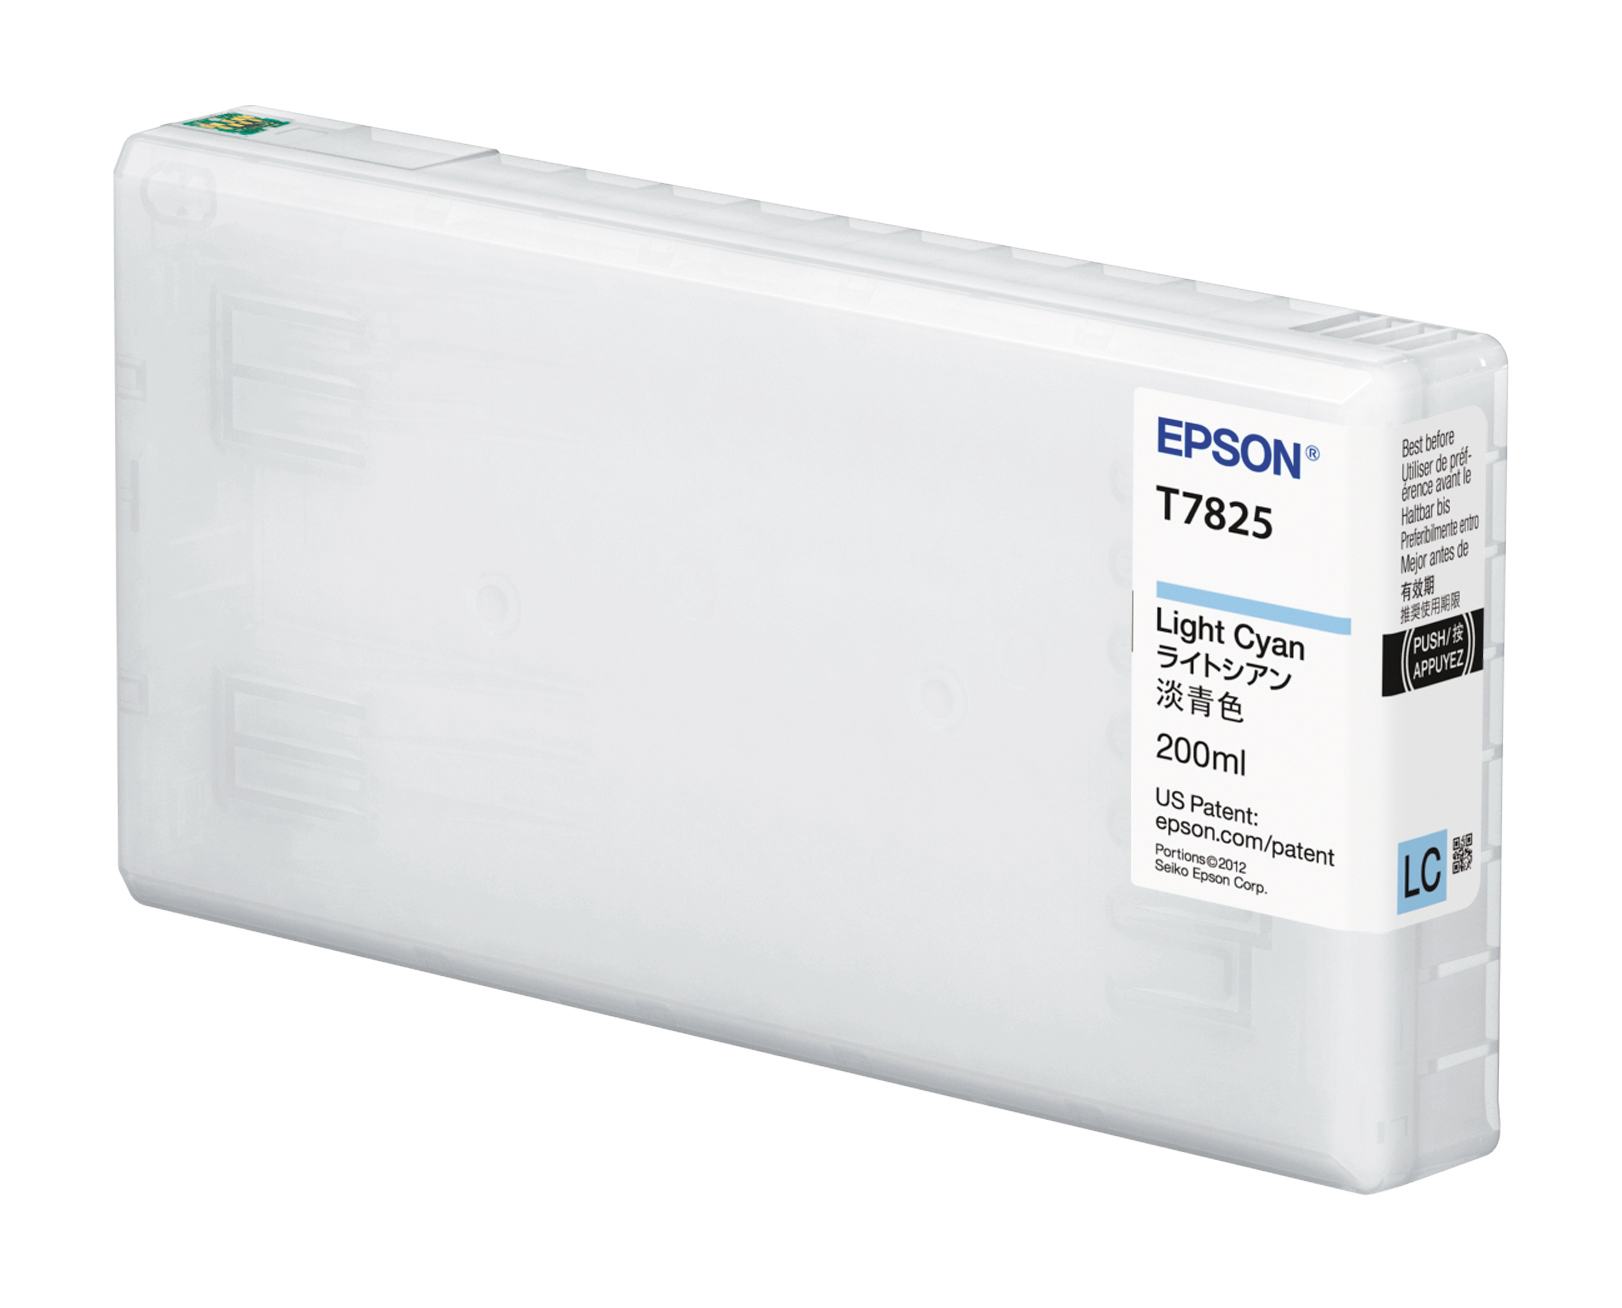 Epson D700 200ml Light Cyan Ink Cartridge